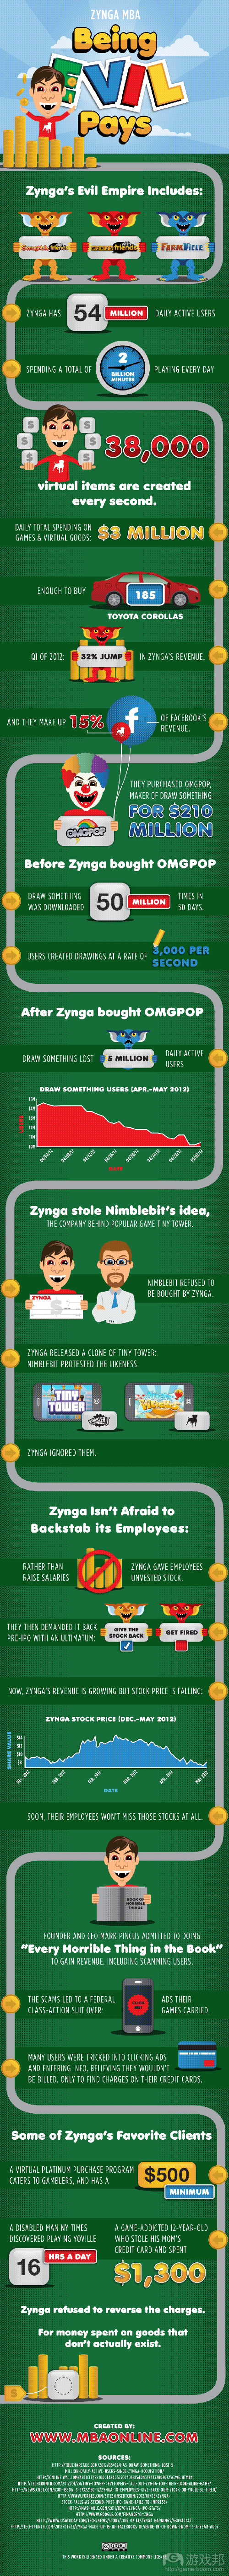 zynga-evil empire(from MBA Online)